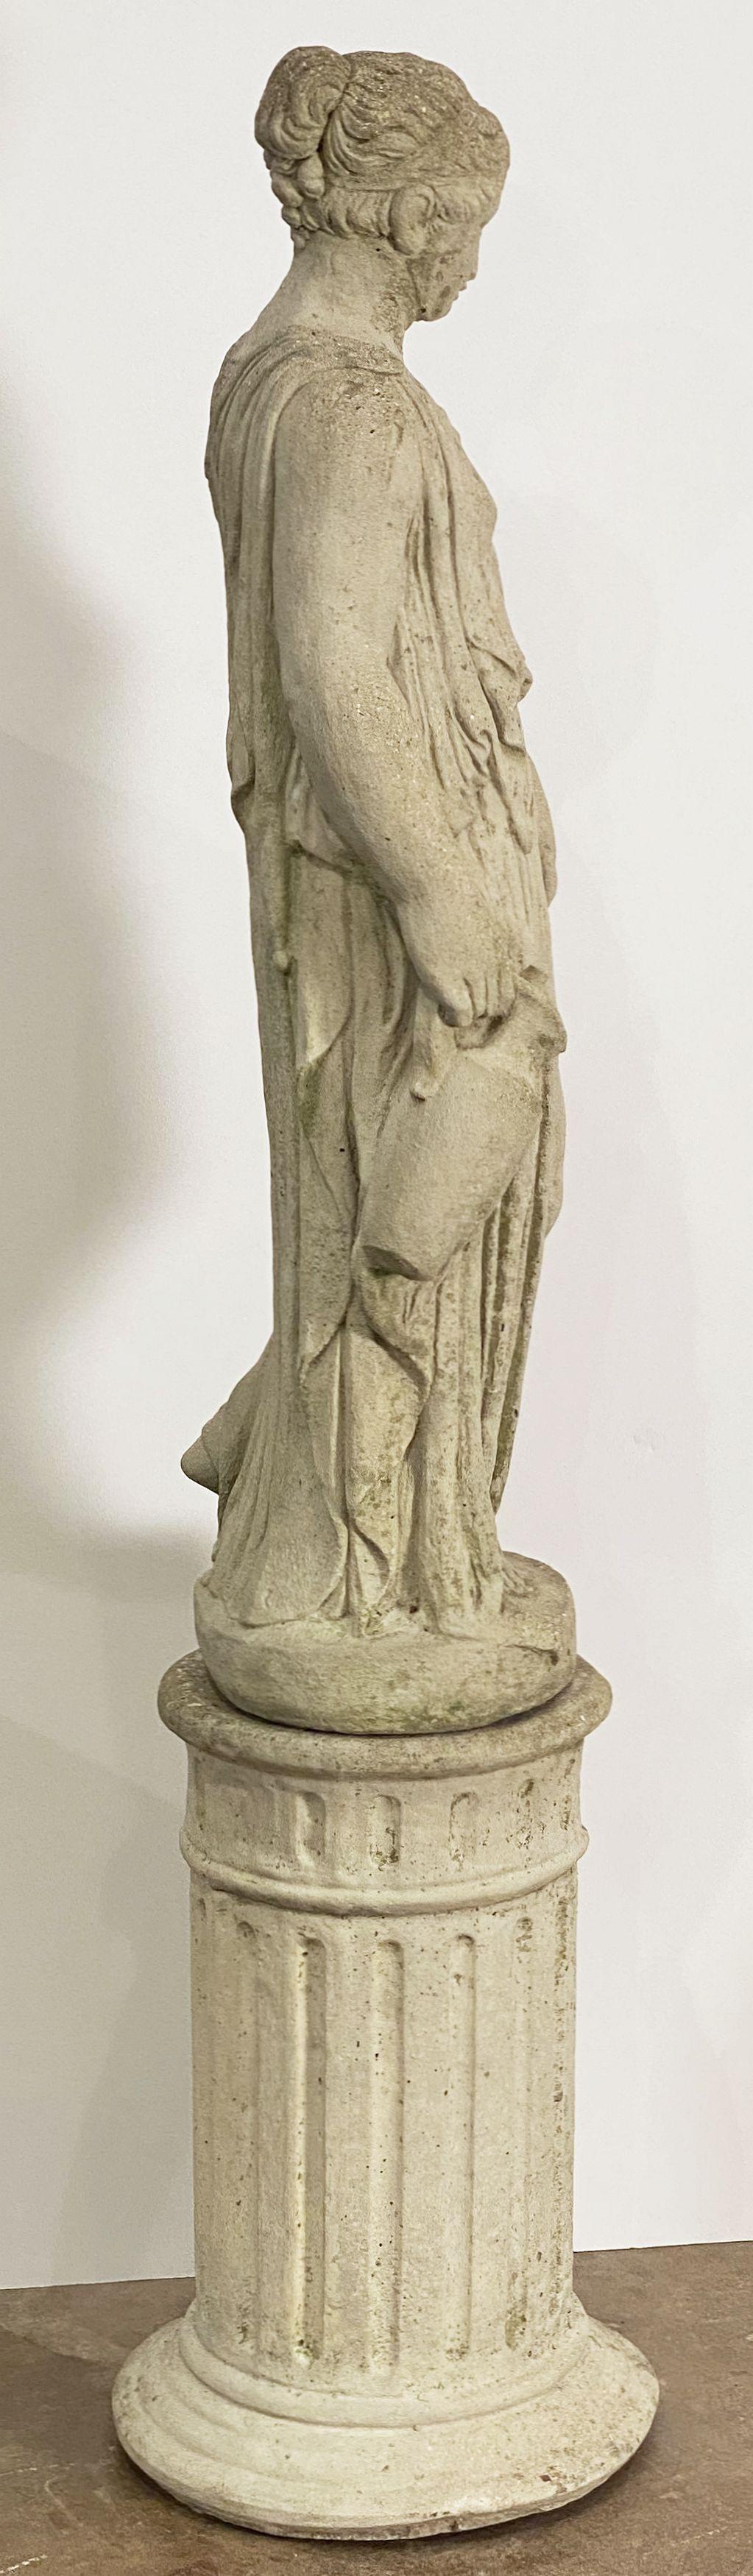 Large English Garden Stone Statue of a Maiden on Column Pedestal (H 59 1/4) 11